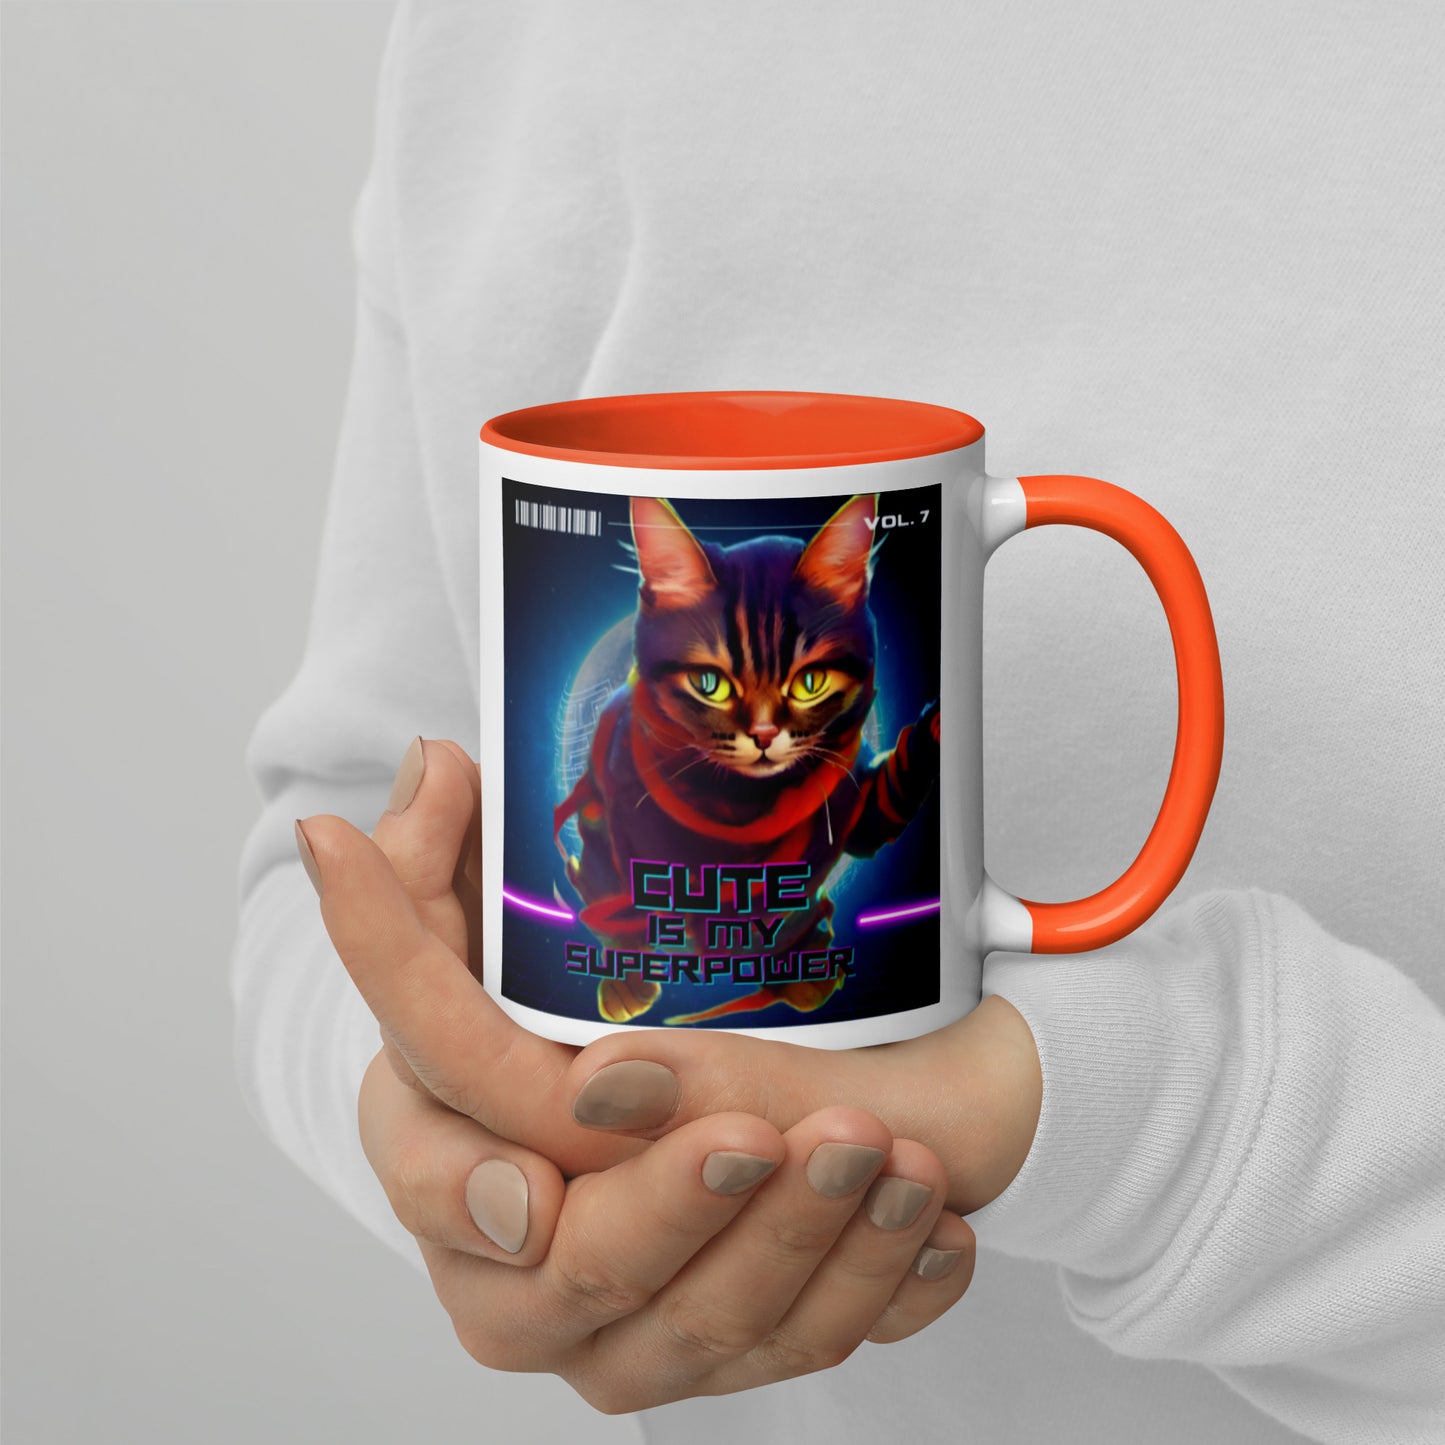 Colorful "Superpower" Mug